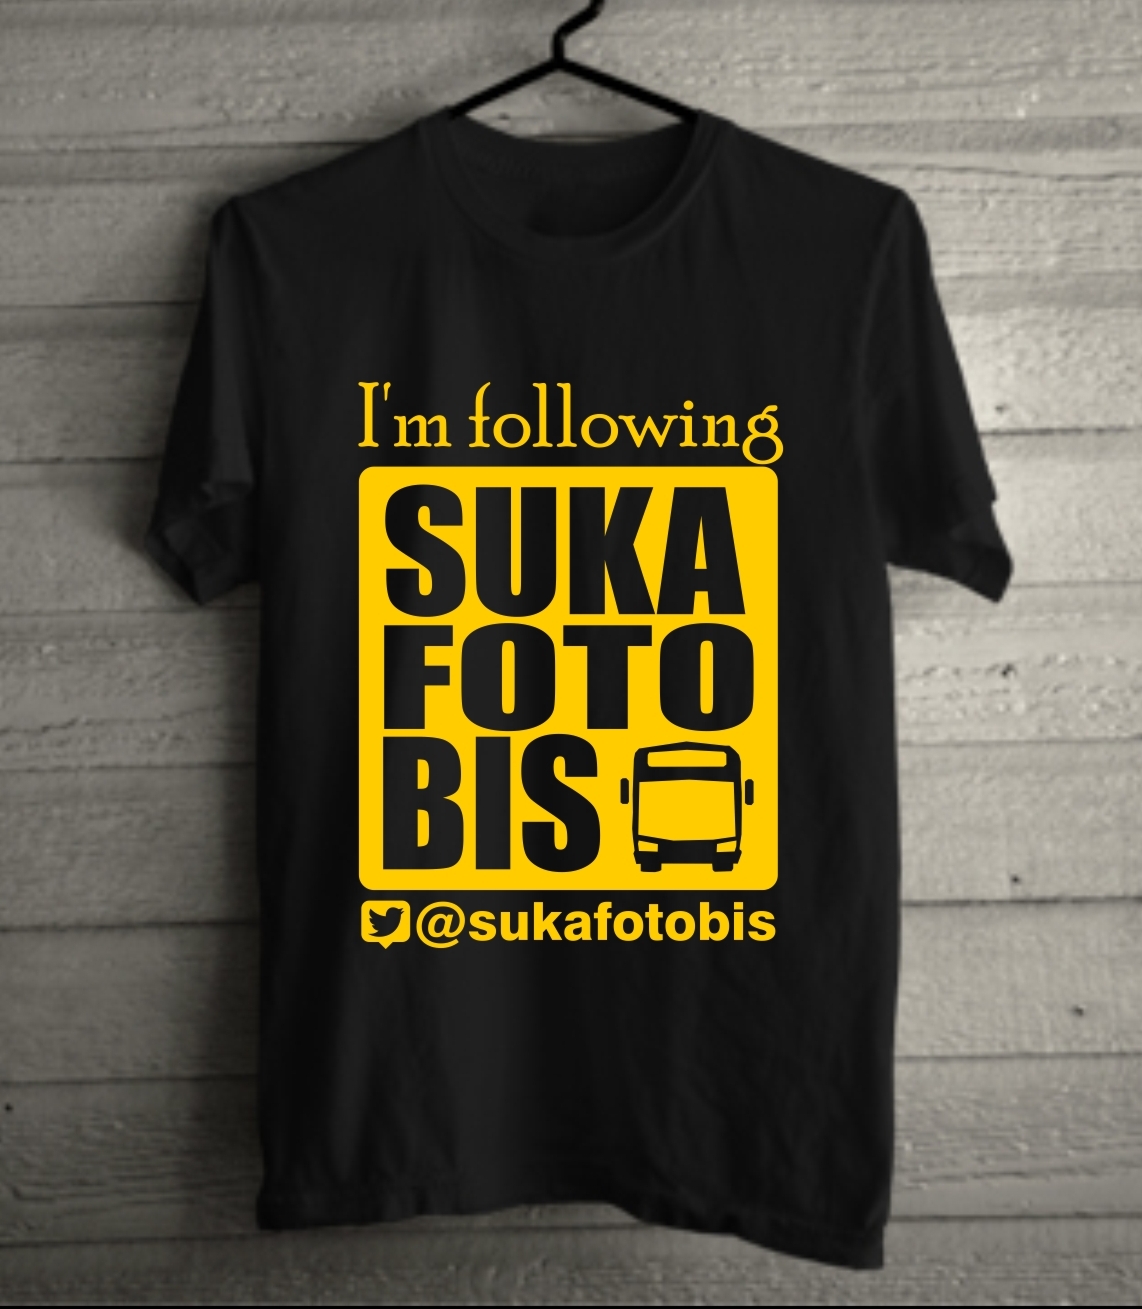 Sukafotobis Share Bus Picture Is Fun